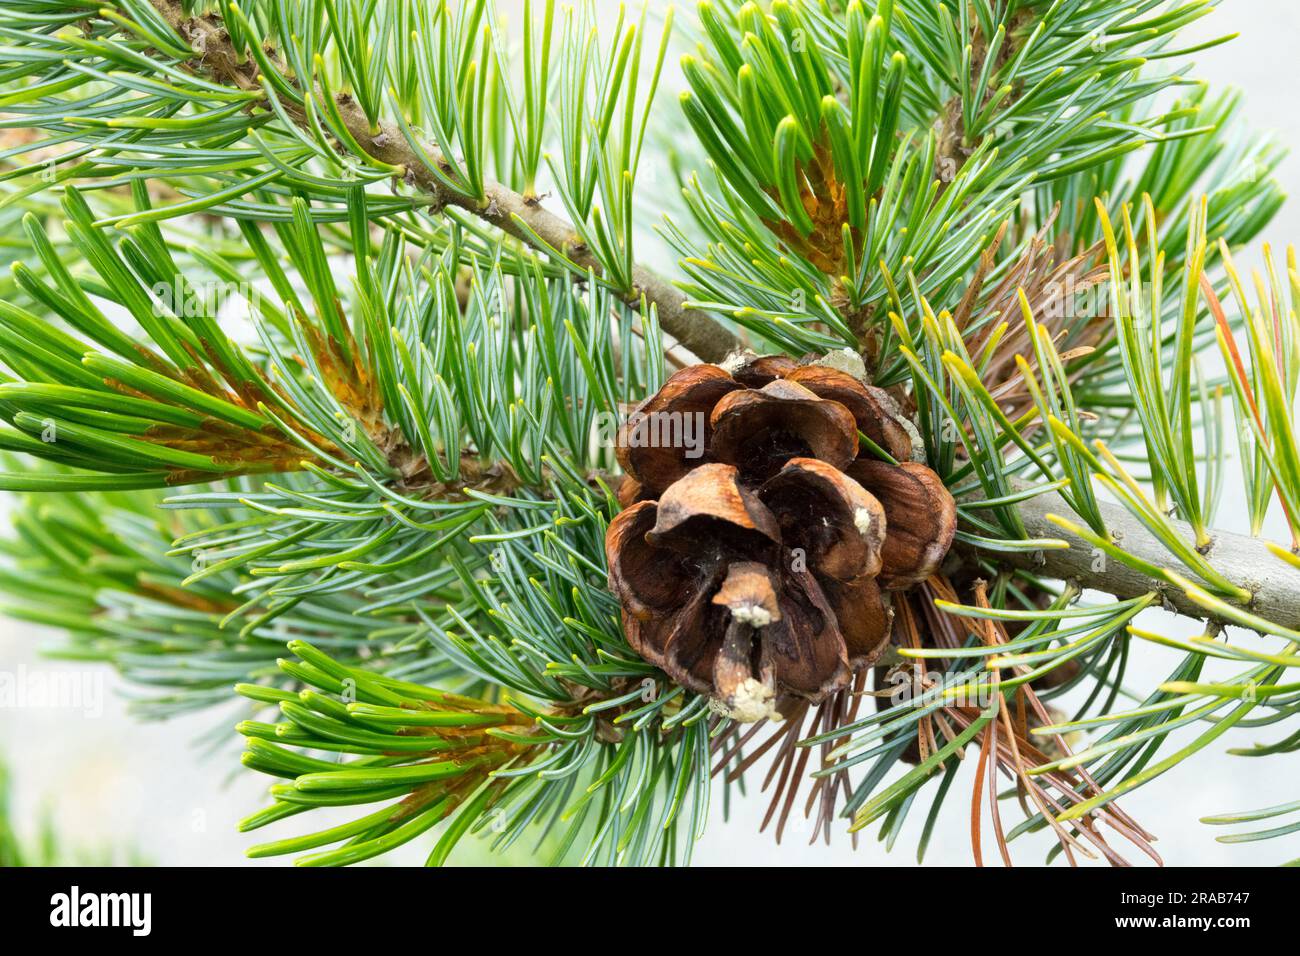 Japanese White Pine, Pinus parviflora cone, Branch, Needles, Closeup, Pinus parviflora 'Gyok-kasen' Stock Photo